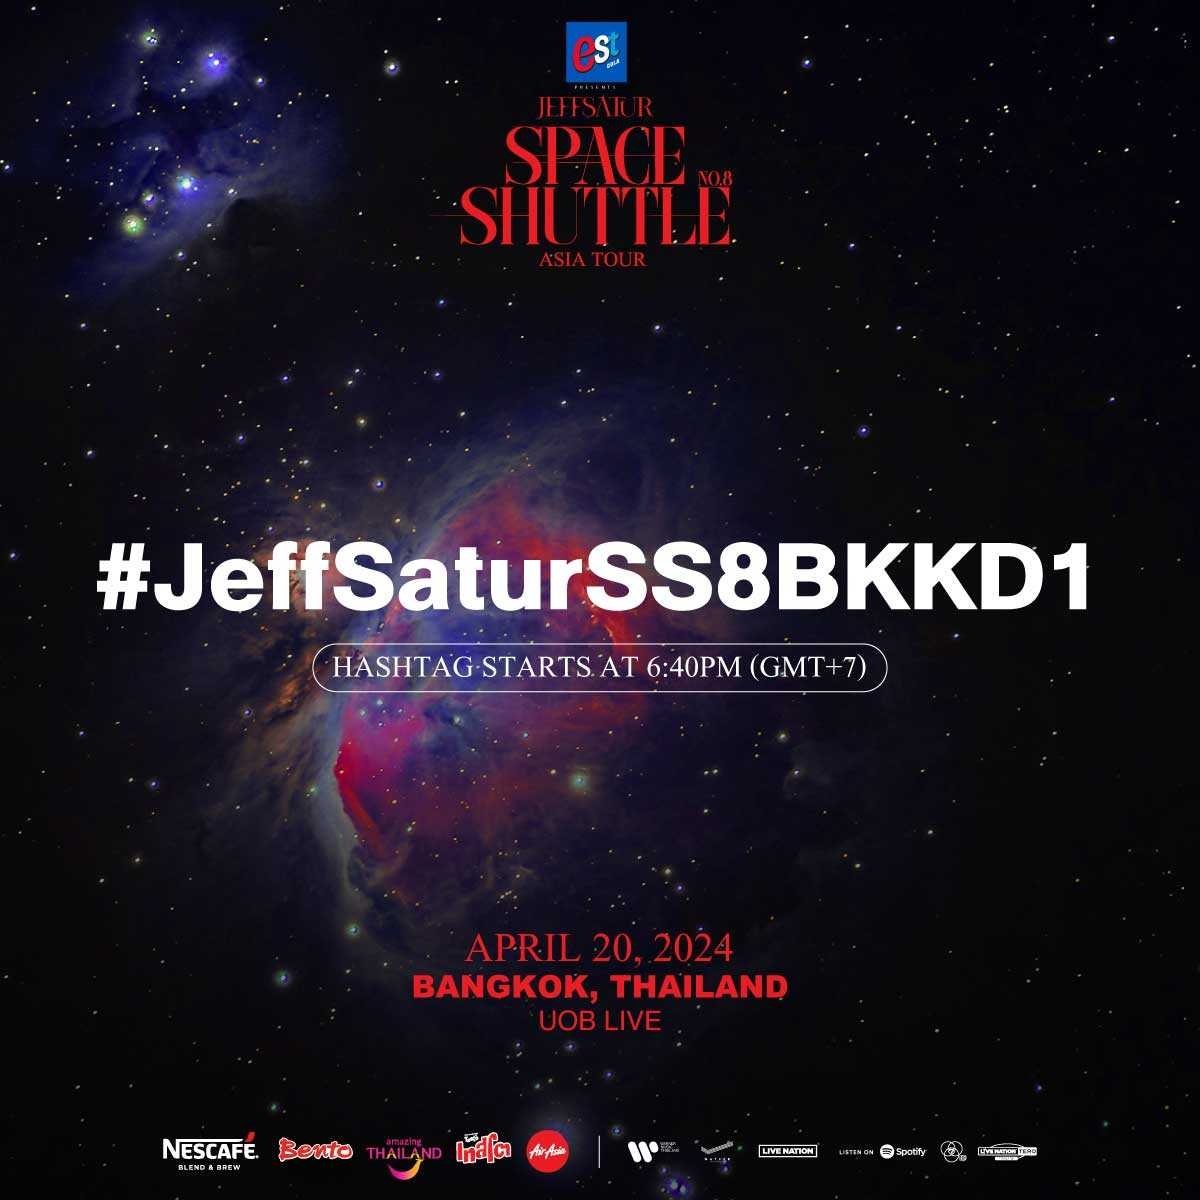 ⁣est Cola Presents JEFF SATUR: SPACE SHUTTLE NO.8 ASIA TOUR IN BANGKOK Day 1 🚂

⏰ Hashtag starts at 6:40PM (GMT+7)
⁣
#estColaBorntobeAwesome
#เอสโคล่าเกิดมาซ่ากล้าเป็นตัวเอง
#JeffSatur
#JeffSaturSpaceShuttleNo8
#JeffSaturSpaceShuttleNo8BKK
#LiveNationTero